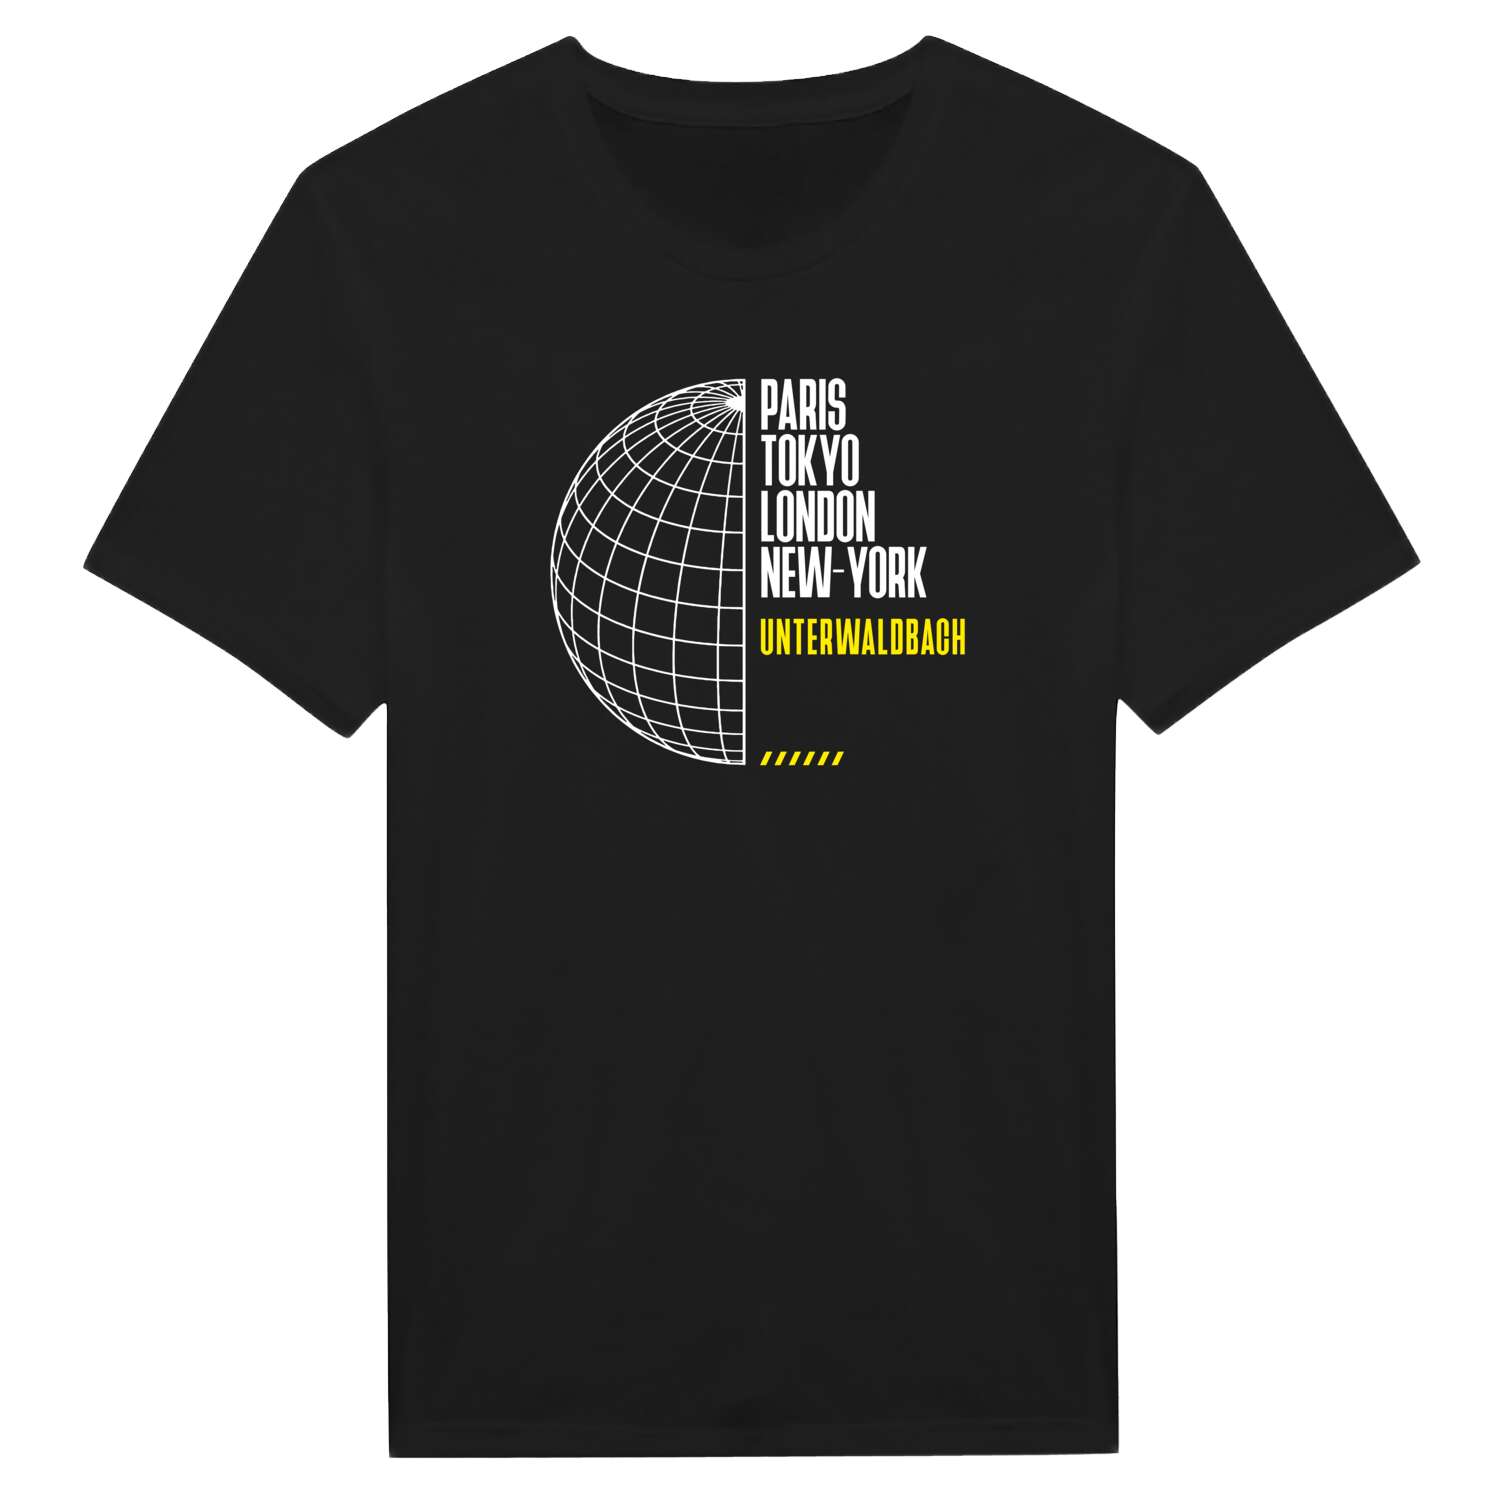 Unterwaldbach T-Shirt »Paris Tokyo London«